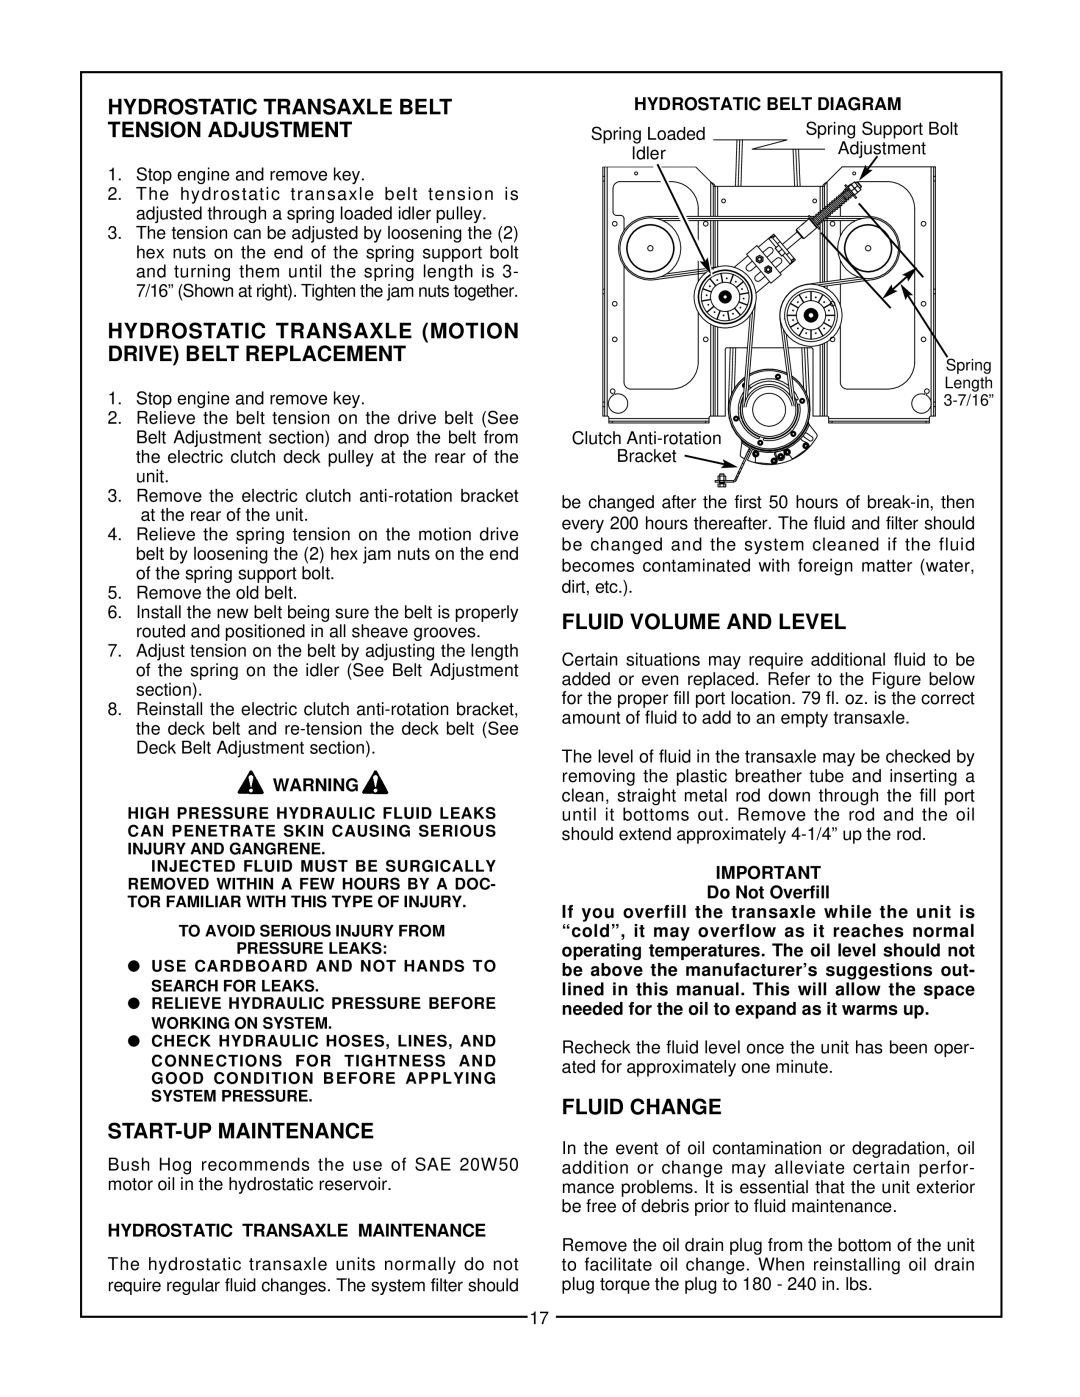 Bush Hog Estate Series manual Hydrostatic Transaxle Belt Tension Adjustment, Start-Upmaintenance, Fluid Volume And Level 